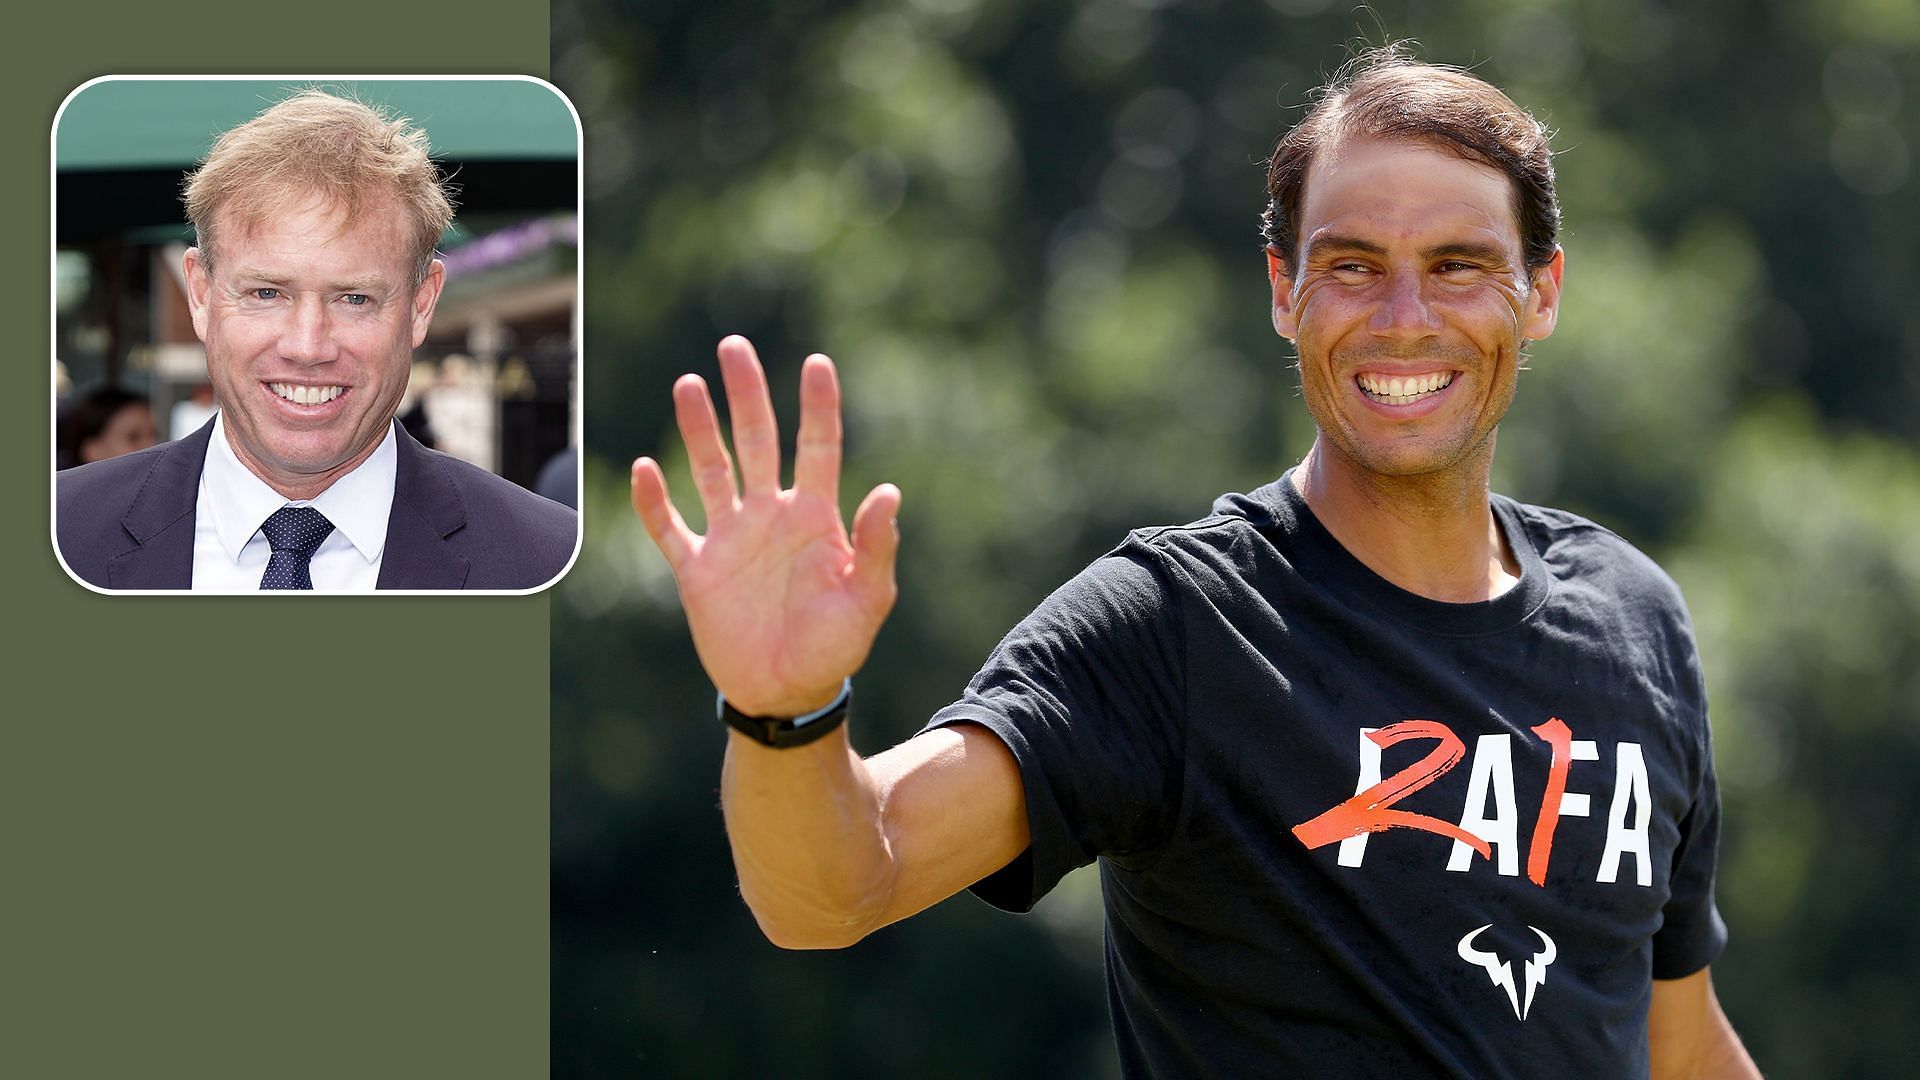 Mark Petchey Rafael Nadal French Open